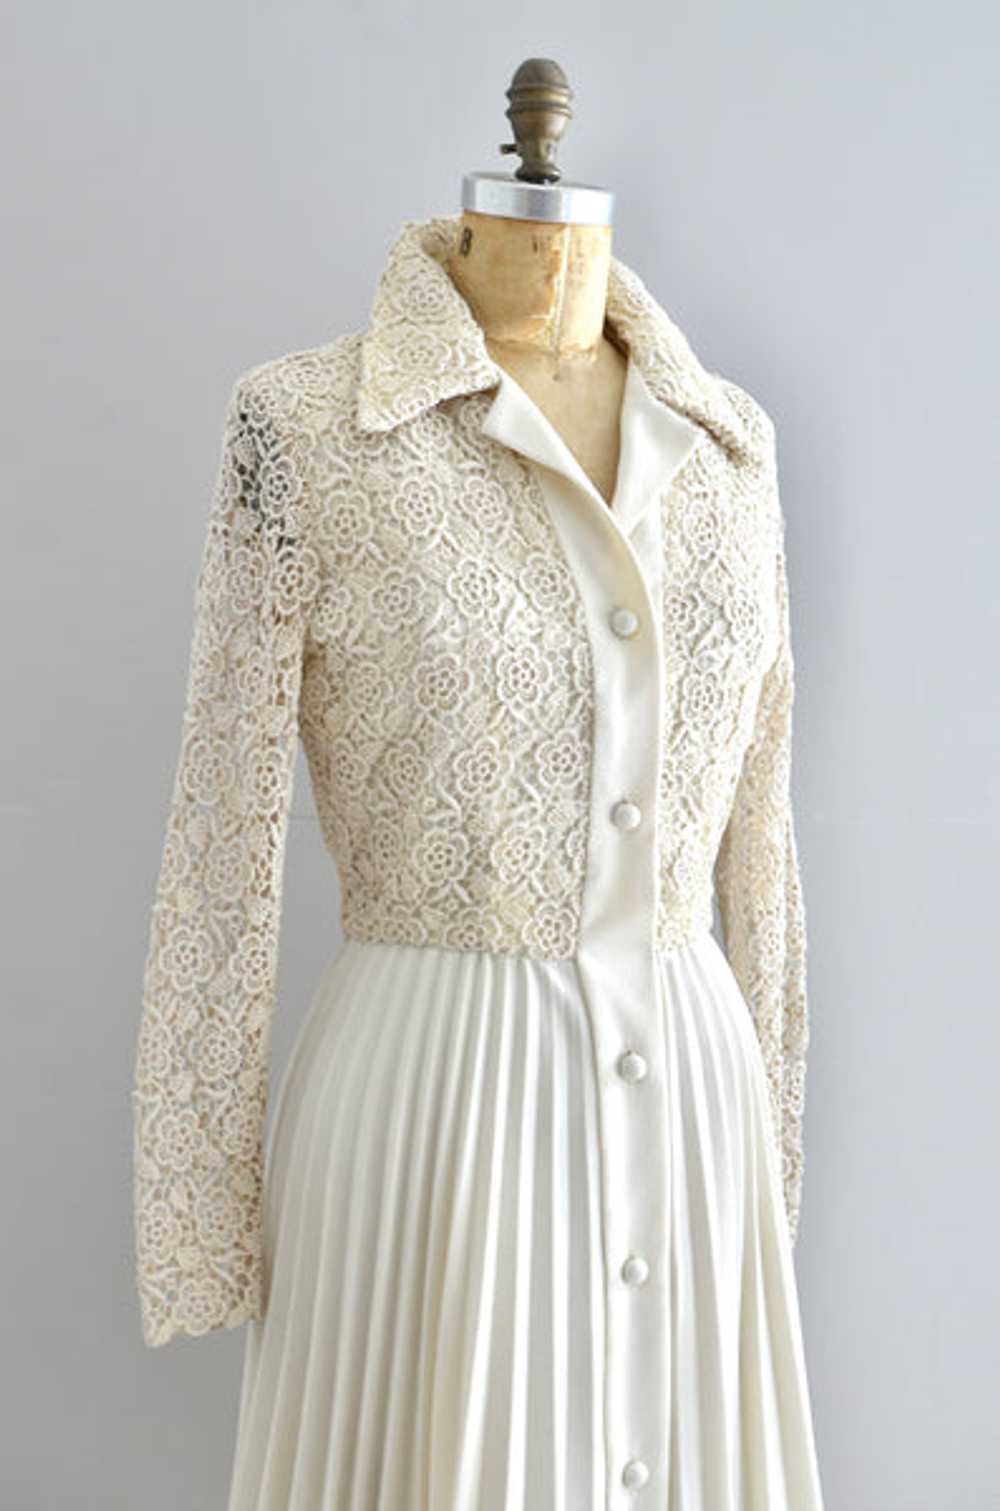 1970s Lace Dress - image 2